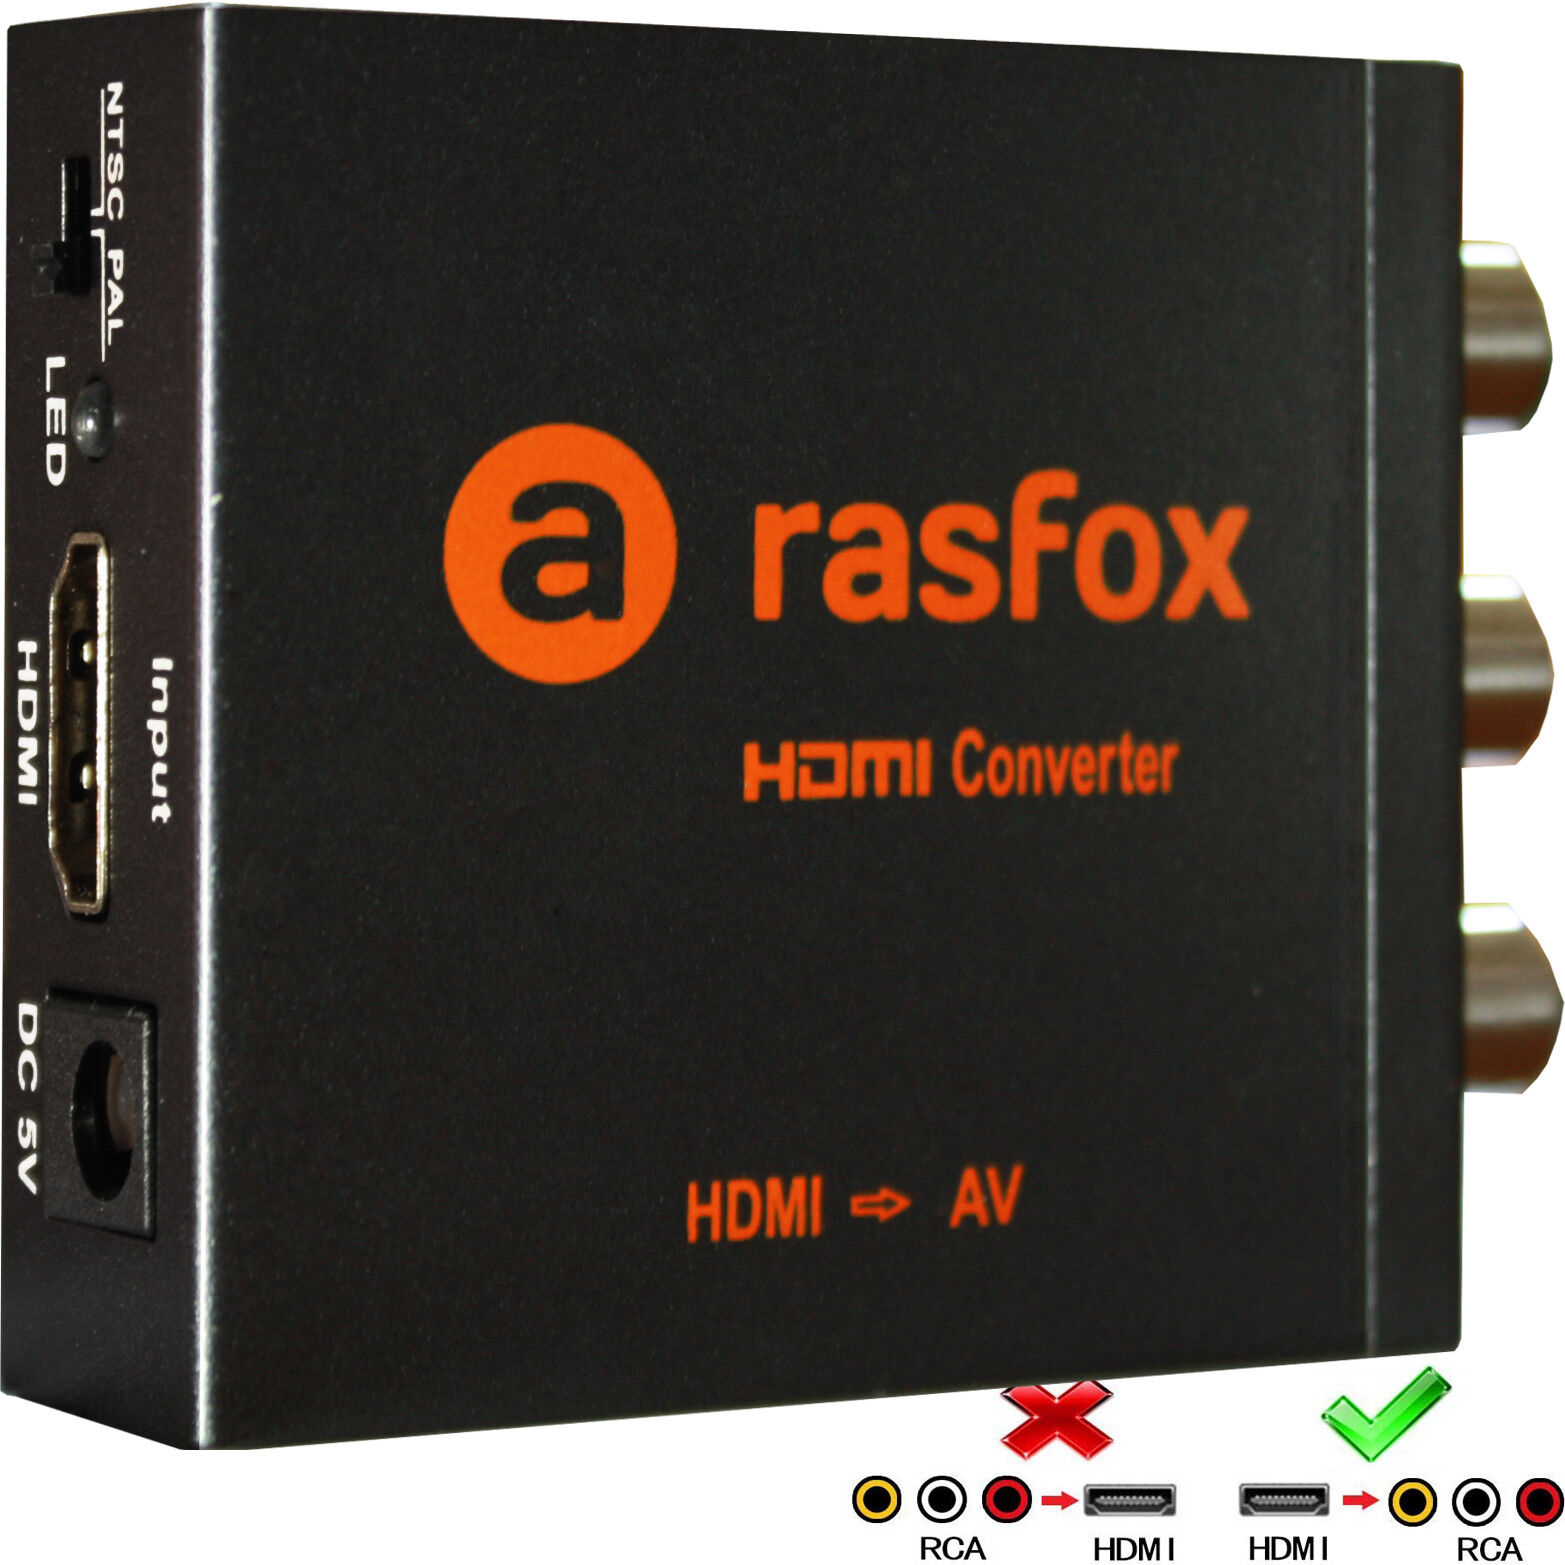 HDMI to AV / RCA Converter 1080P Fire TV sticker Roku 2/3/4 Apple TV Chromecast